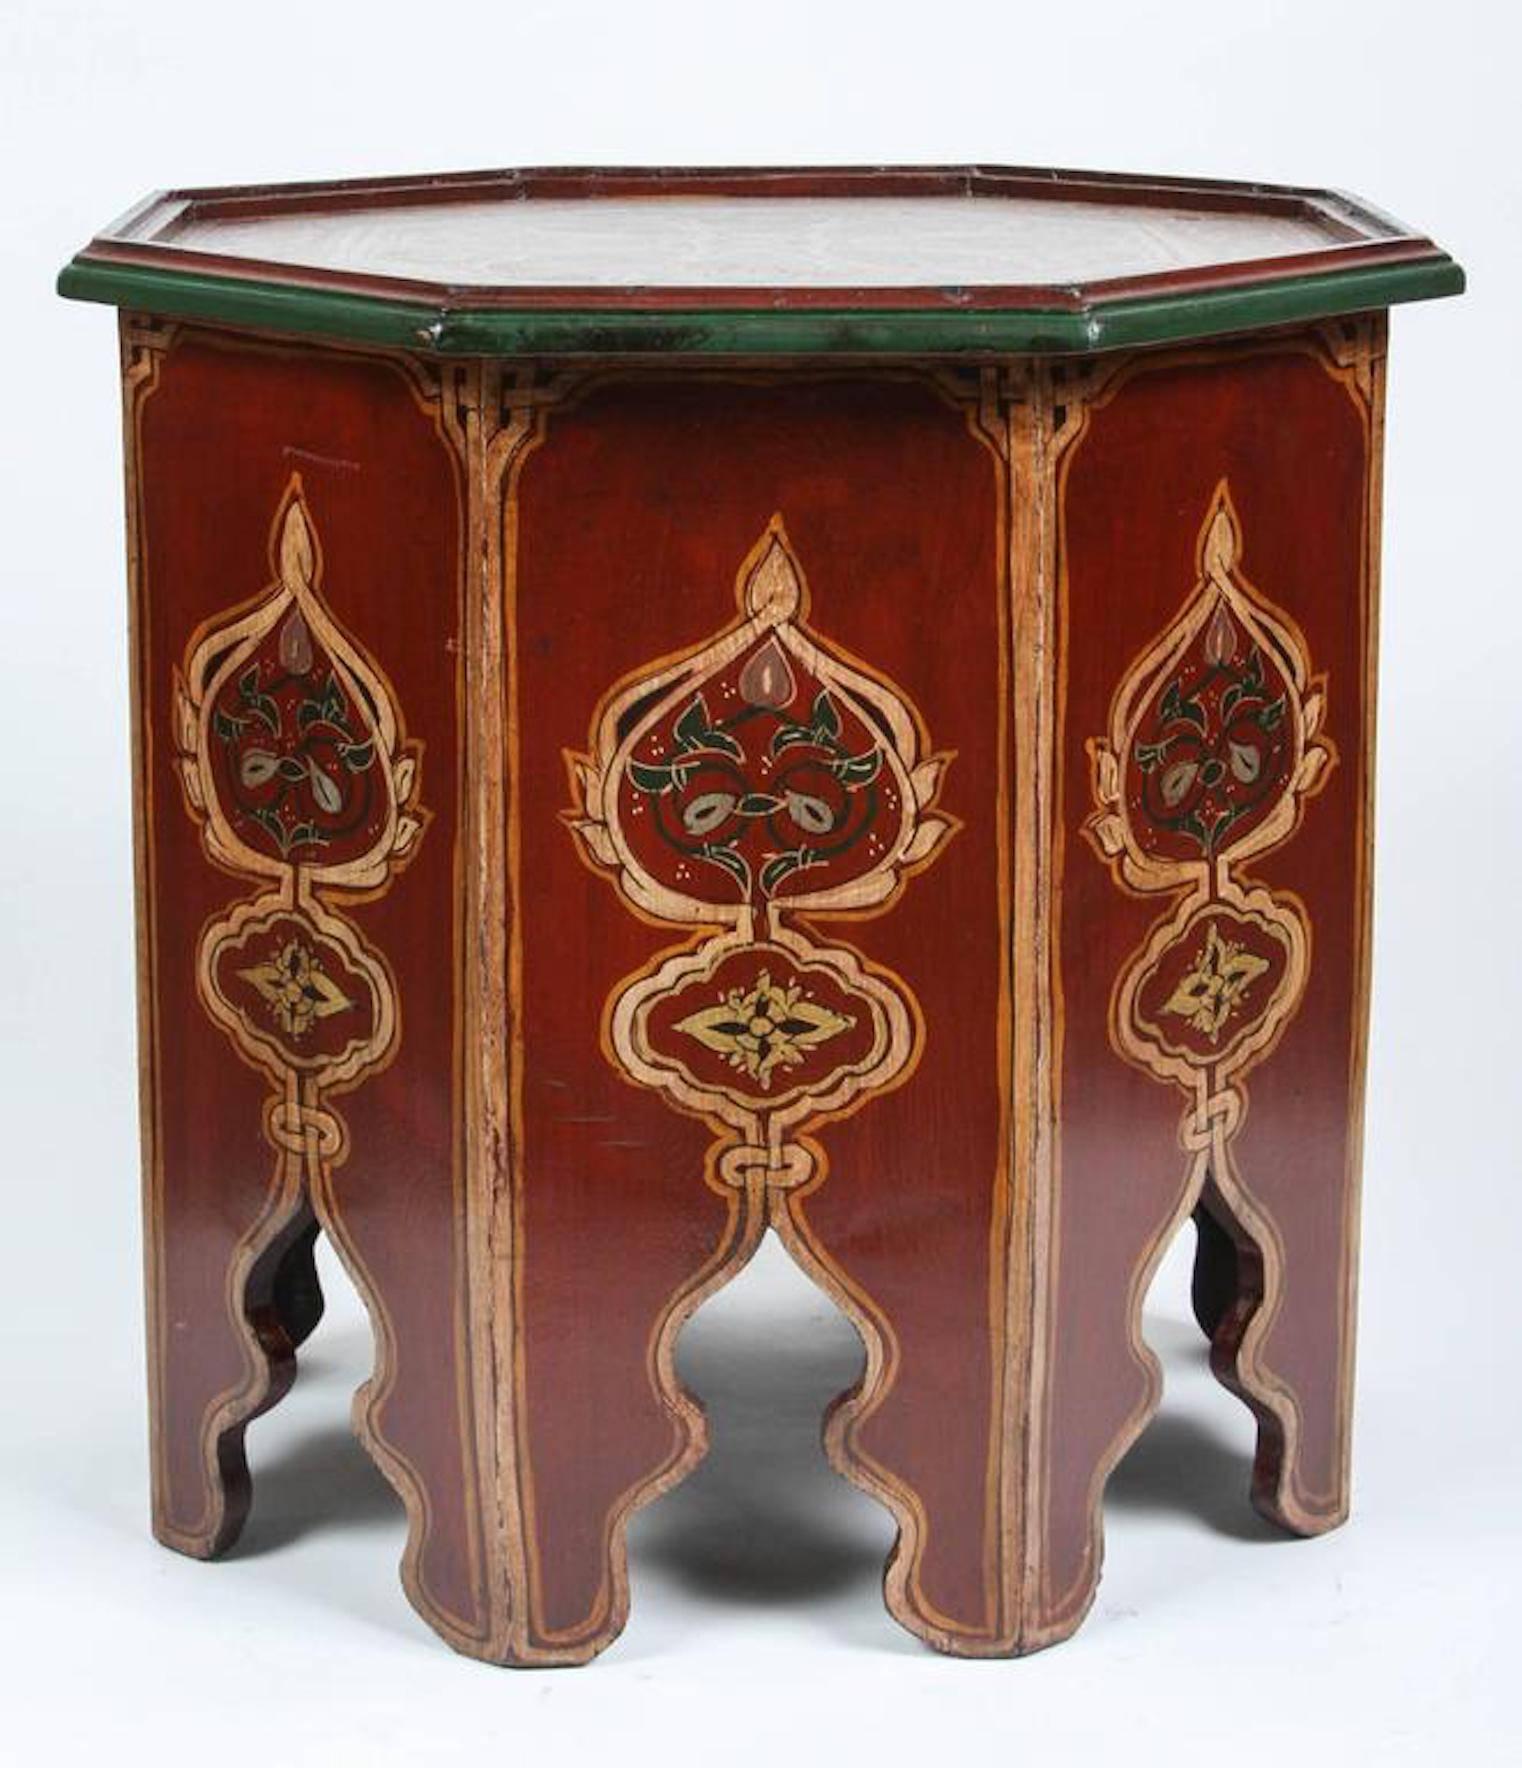 Folk Art Moroccan Hand-Painted Side Table with Moorish Designs